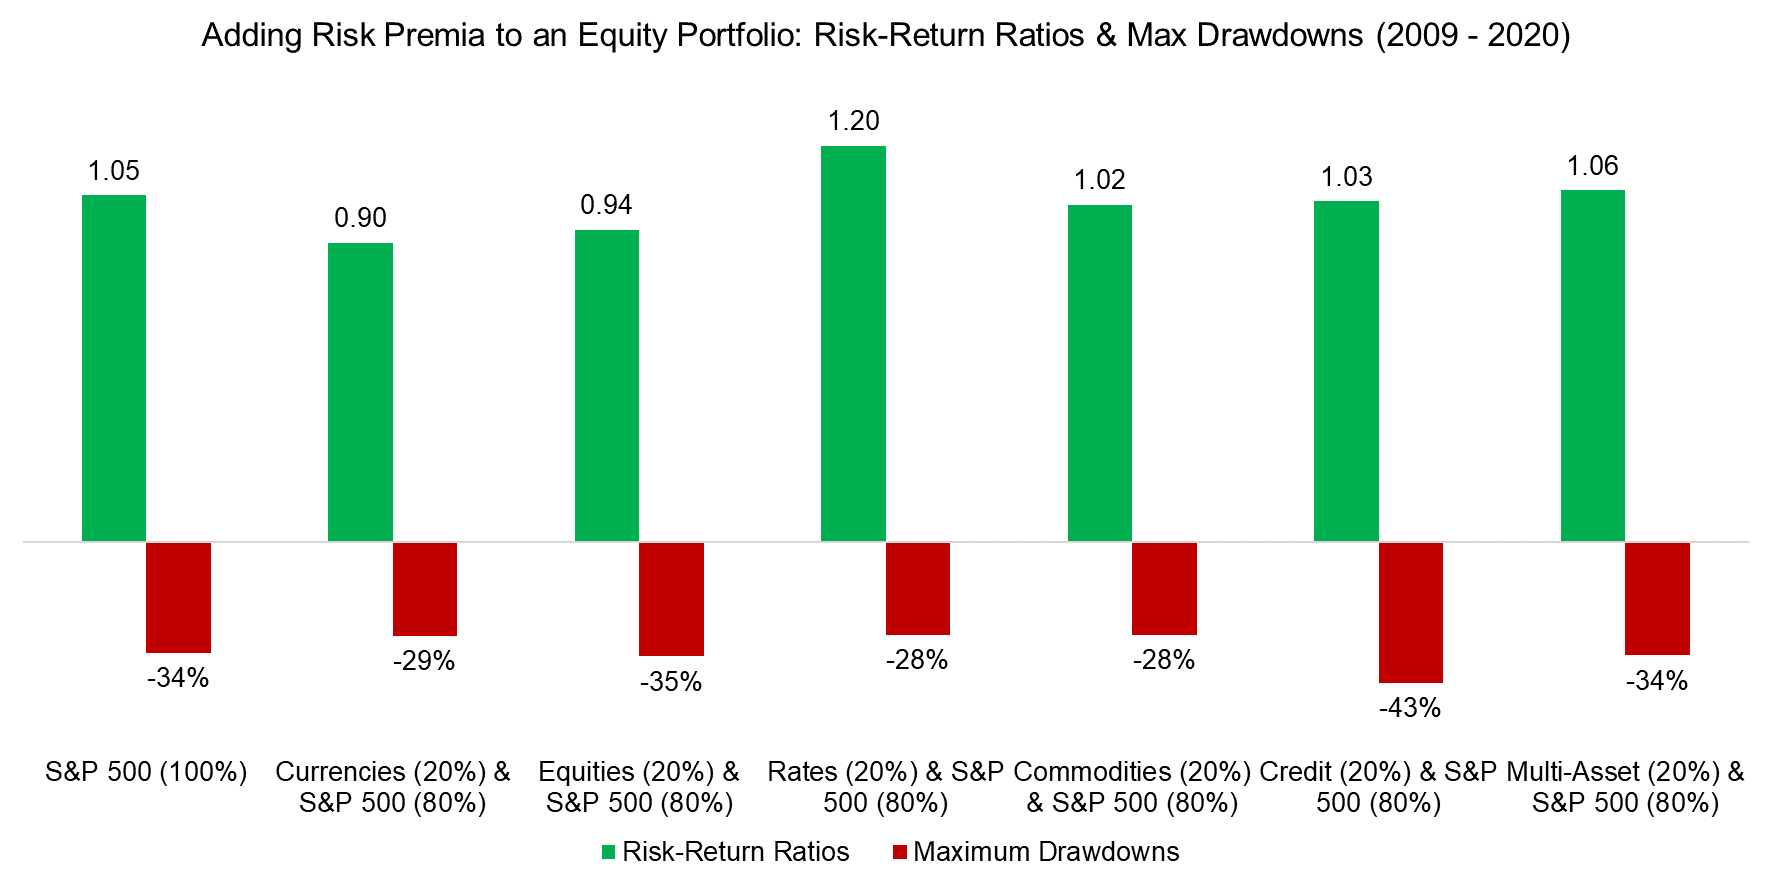 Adding Risk Premia to an Equity Portfolio Risk-Return Ratios & Max Drawdowns (2009 - 2020)